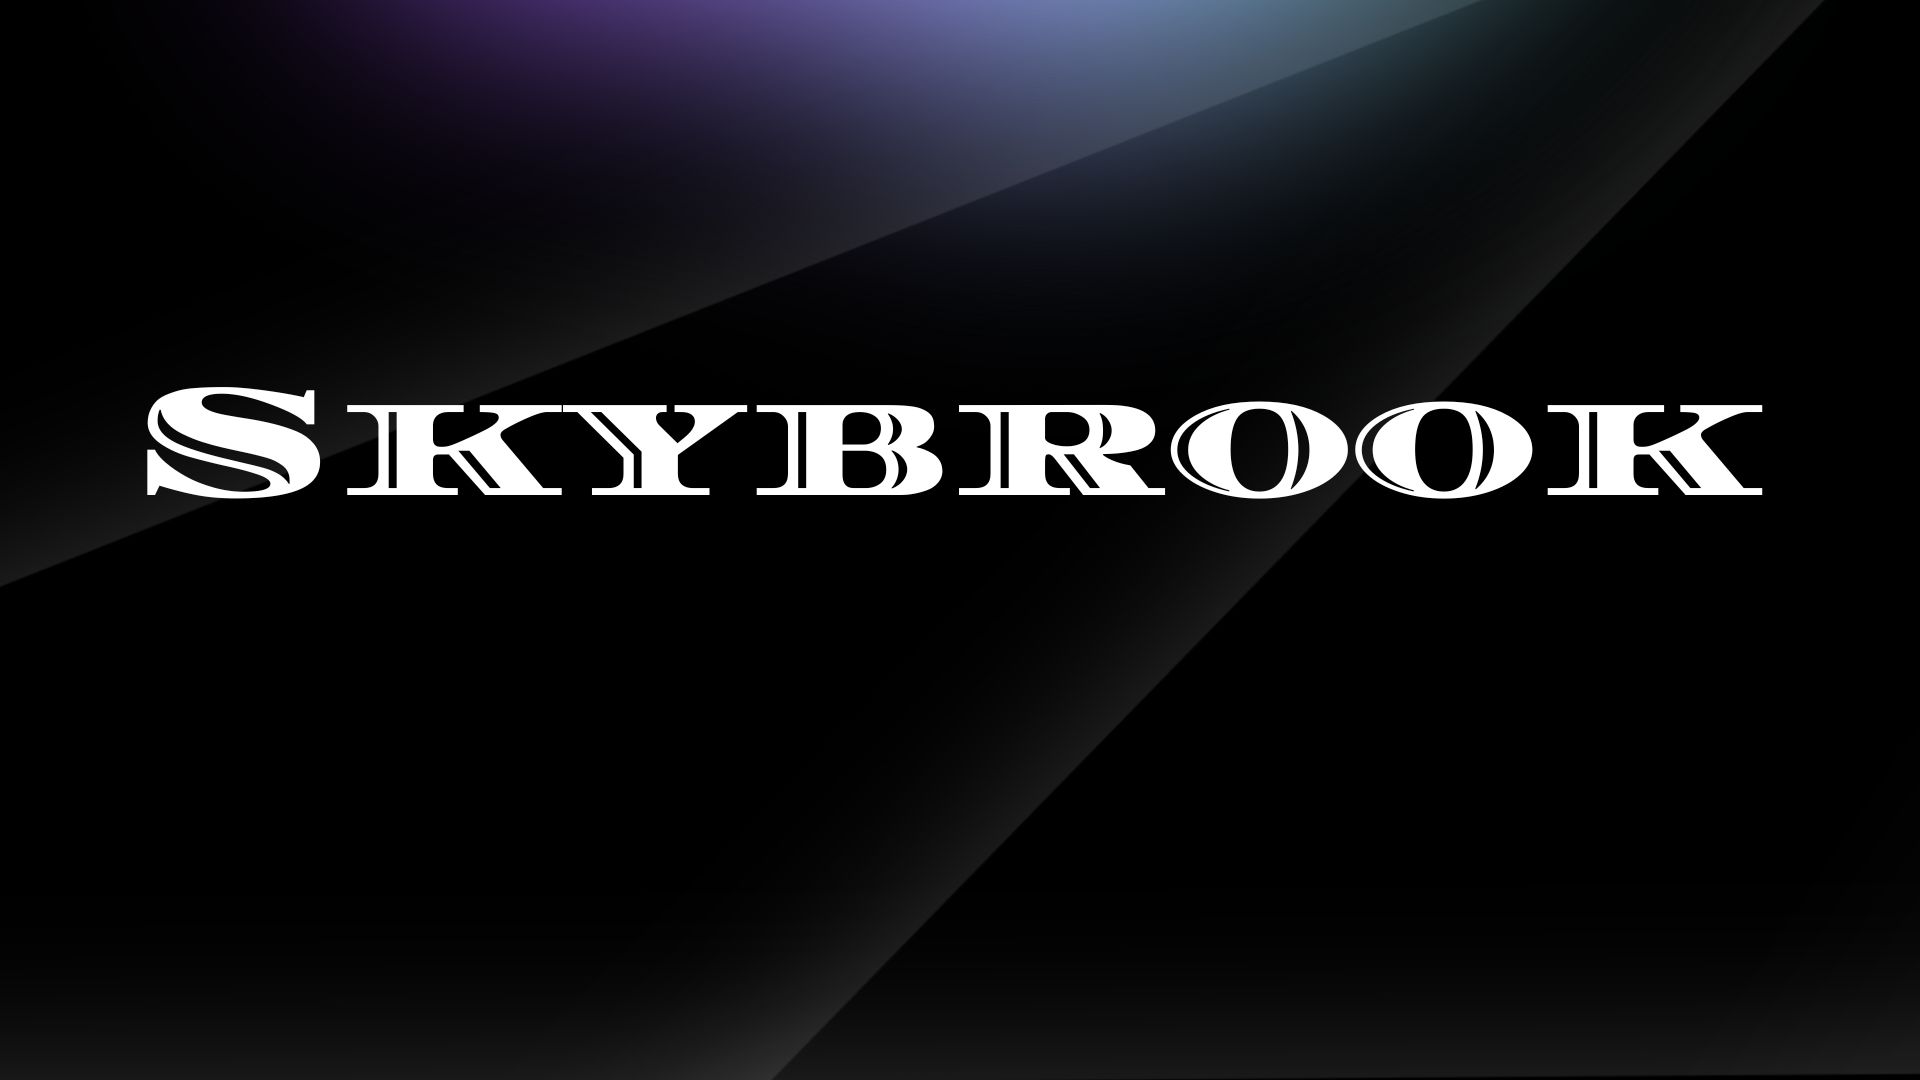 Skybrook #161/1000